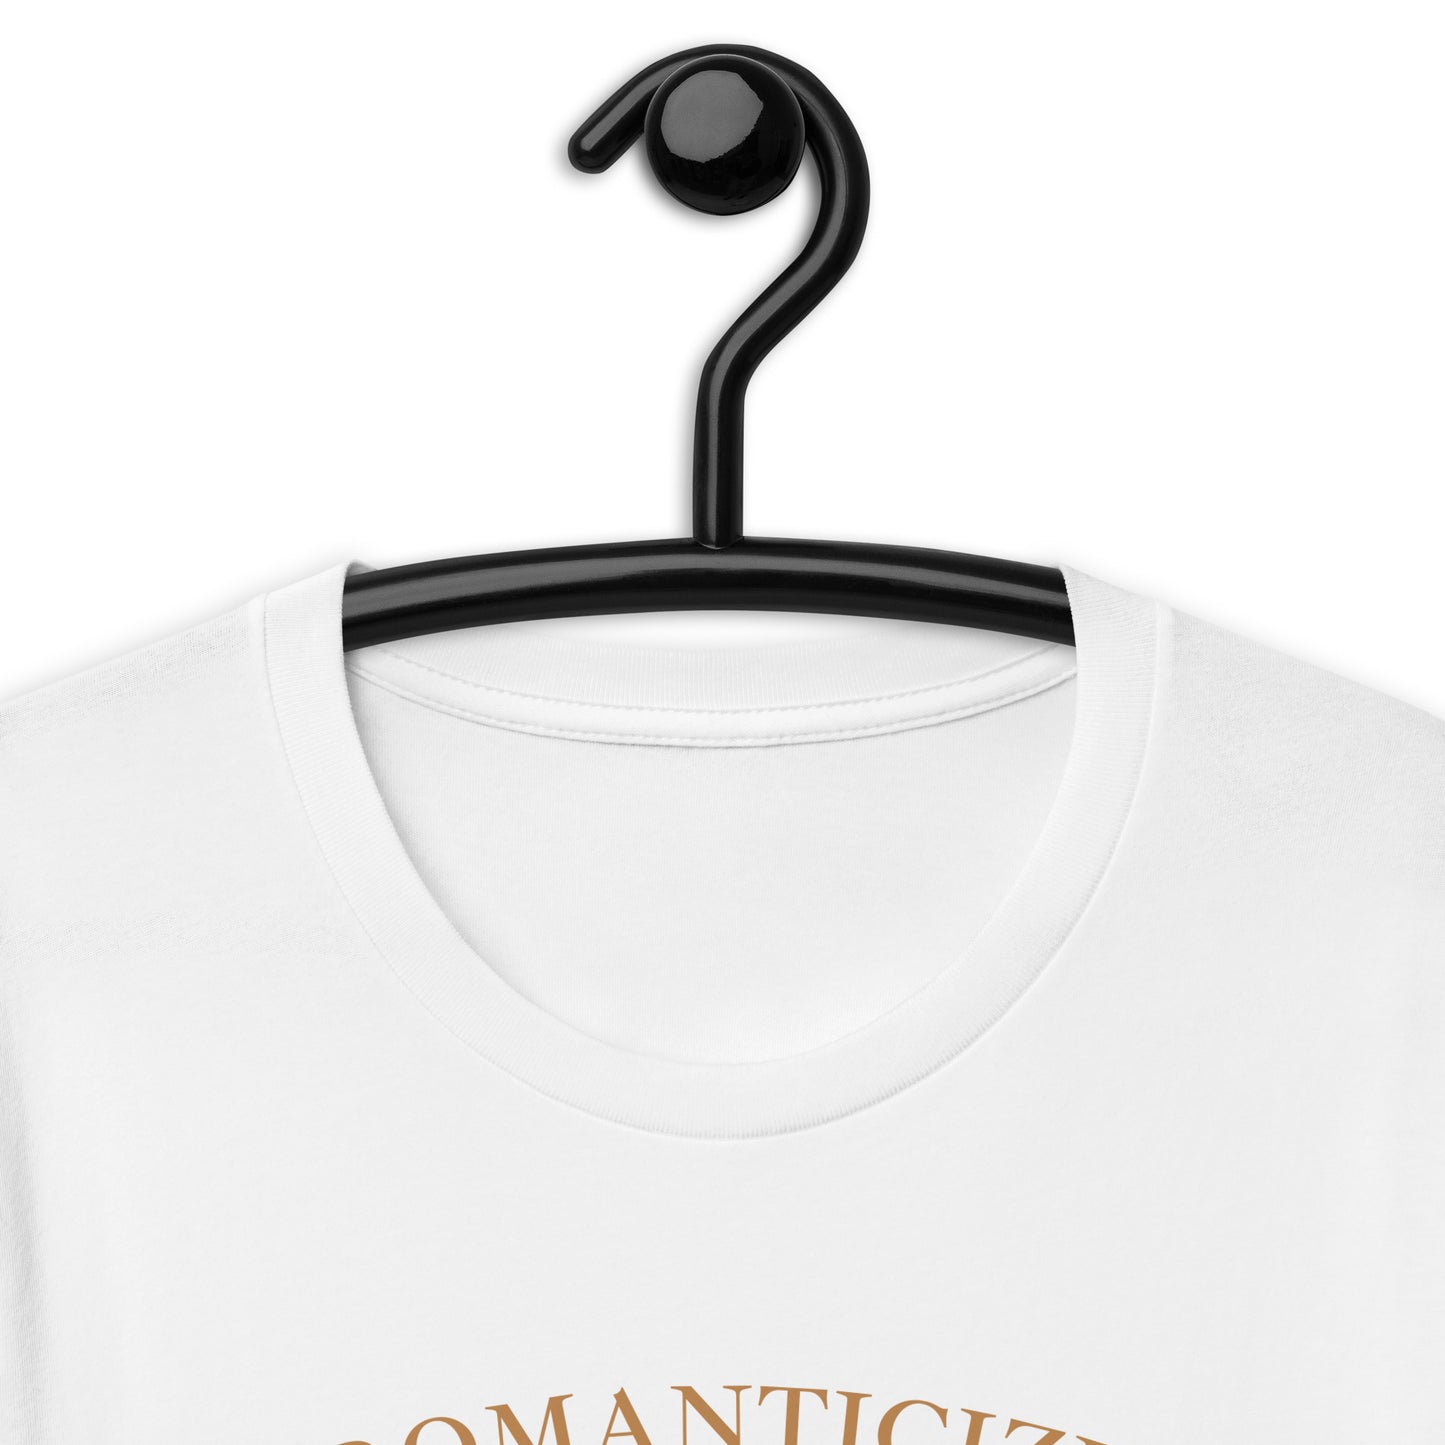 Romanticize Your Life | T-Shirt | Regular Fit